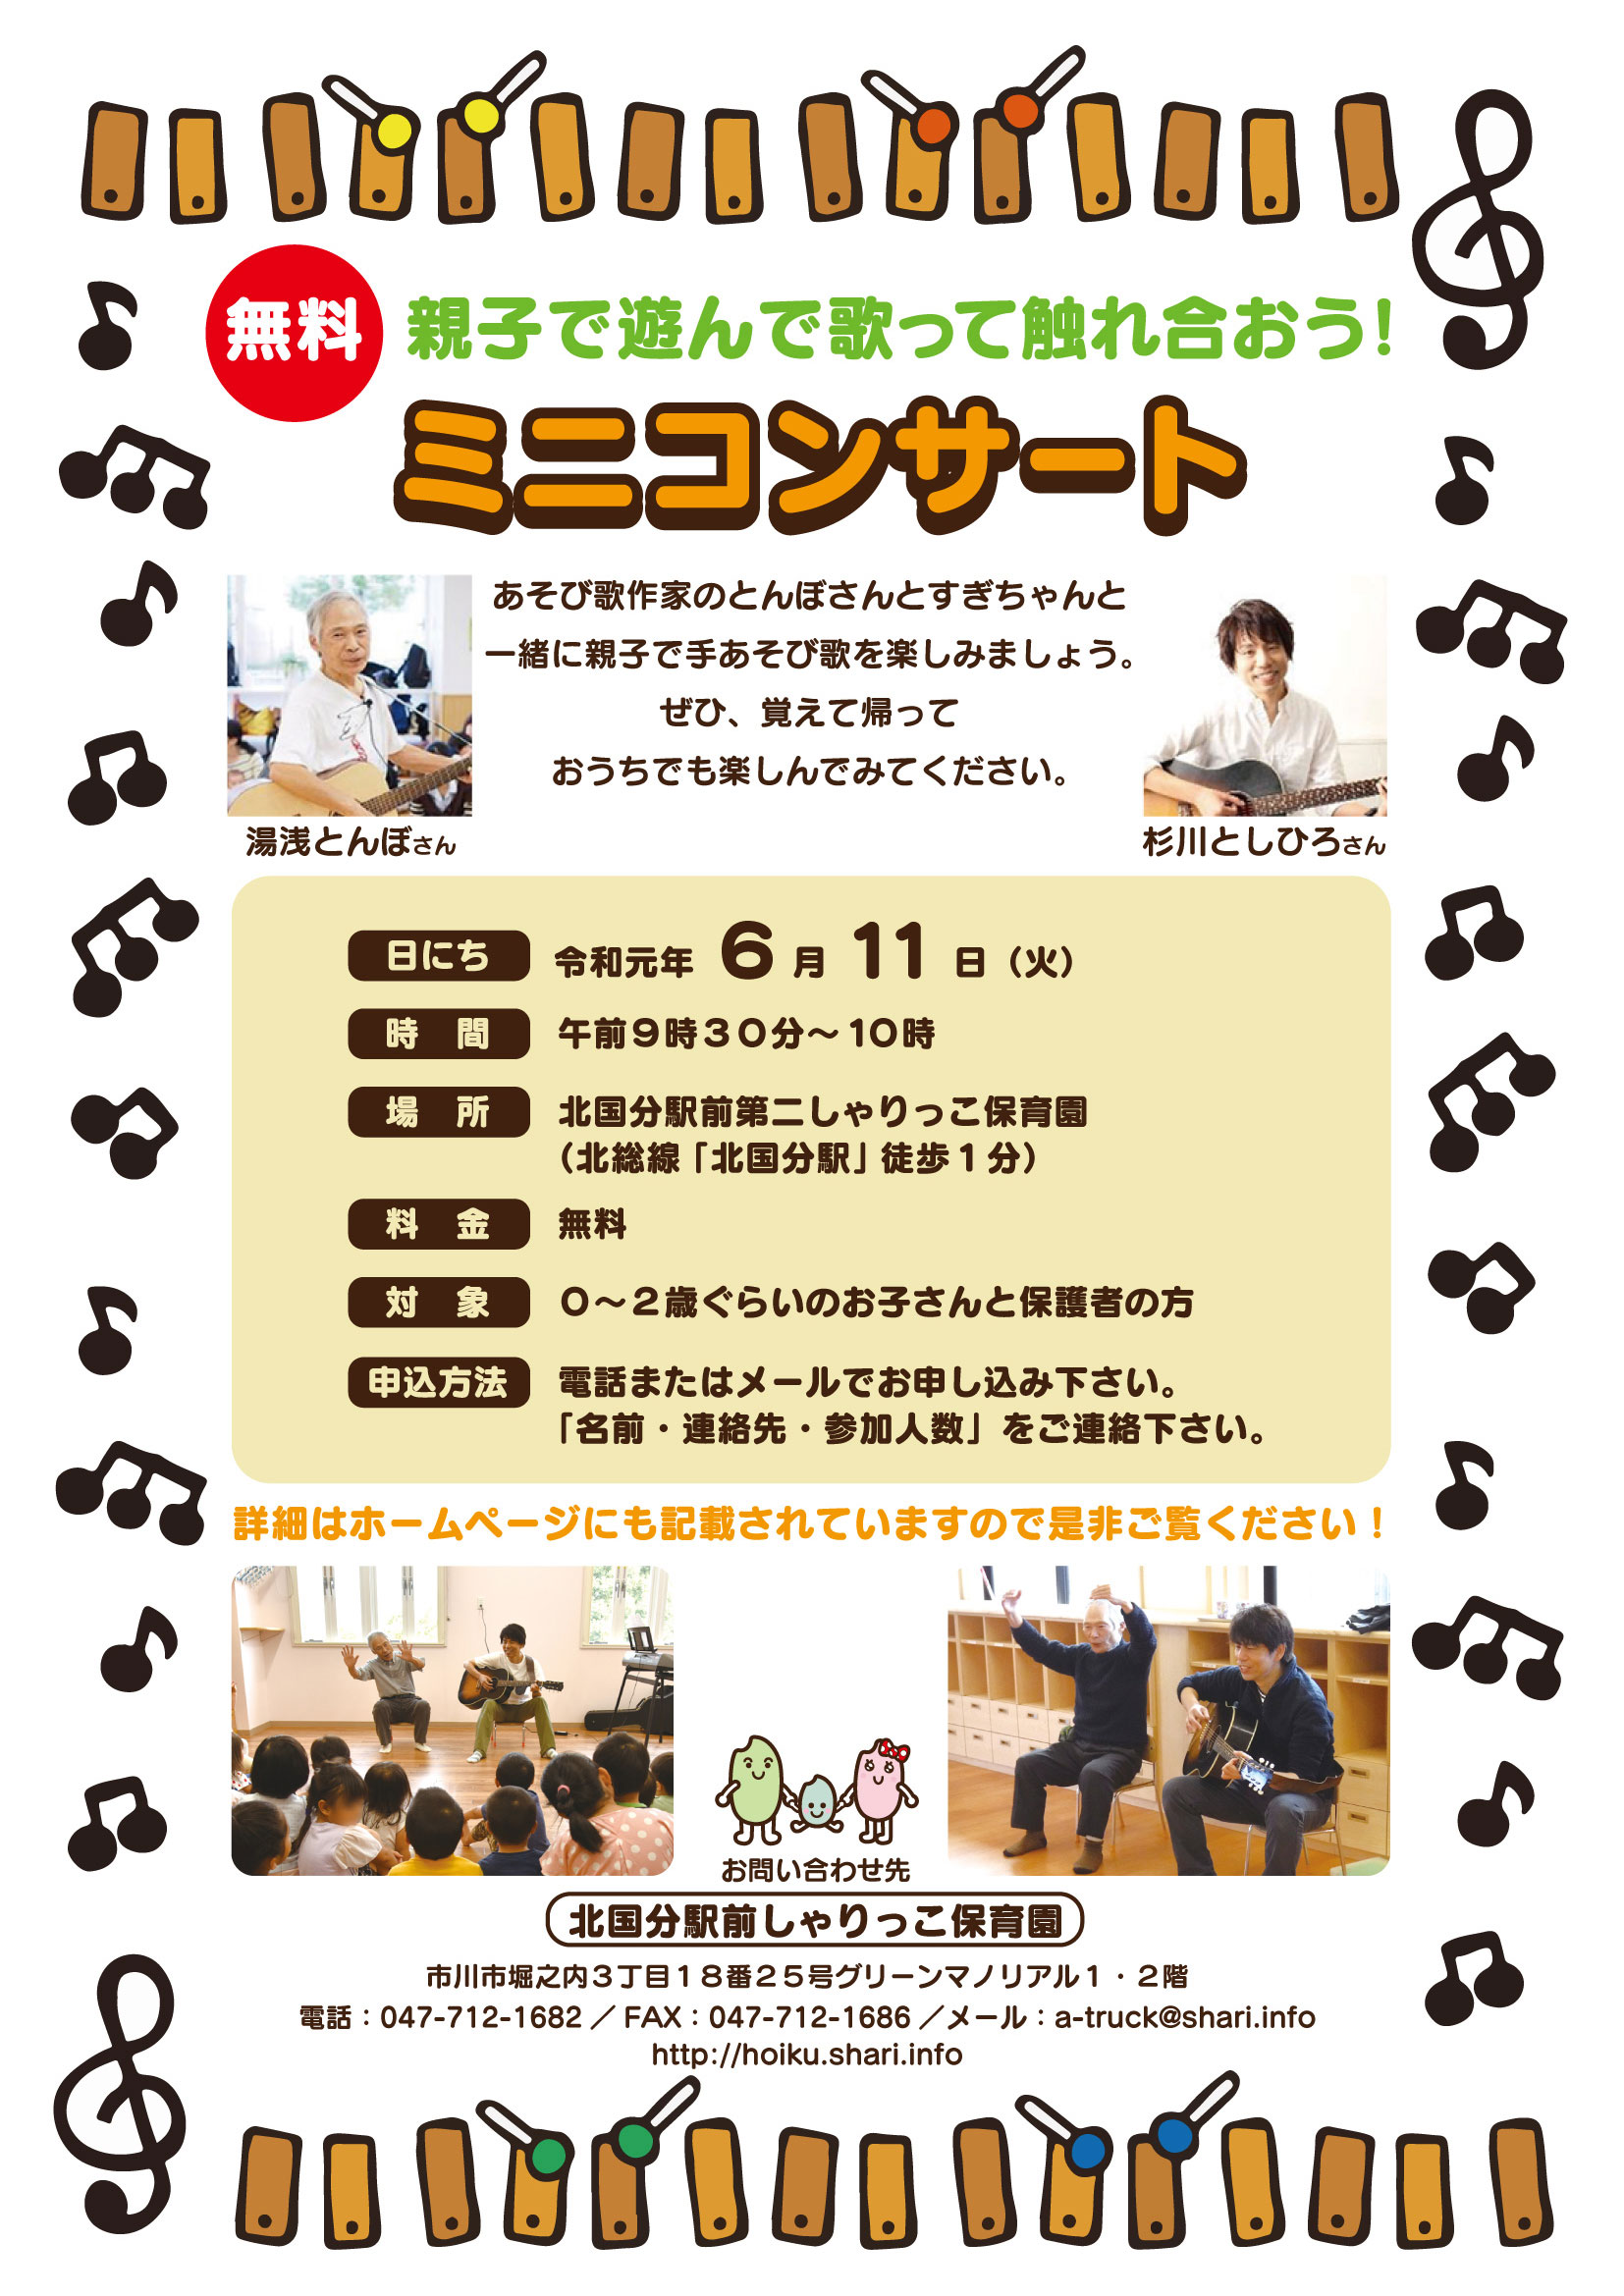 concert_poster_190611.jpg